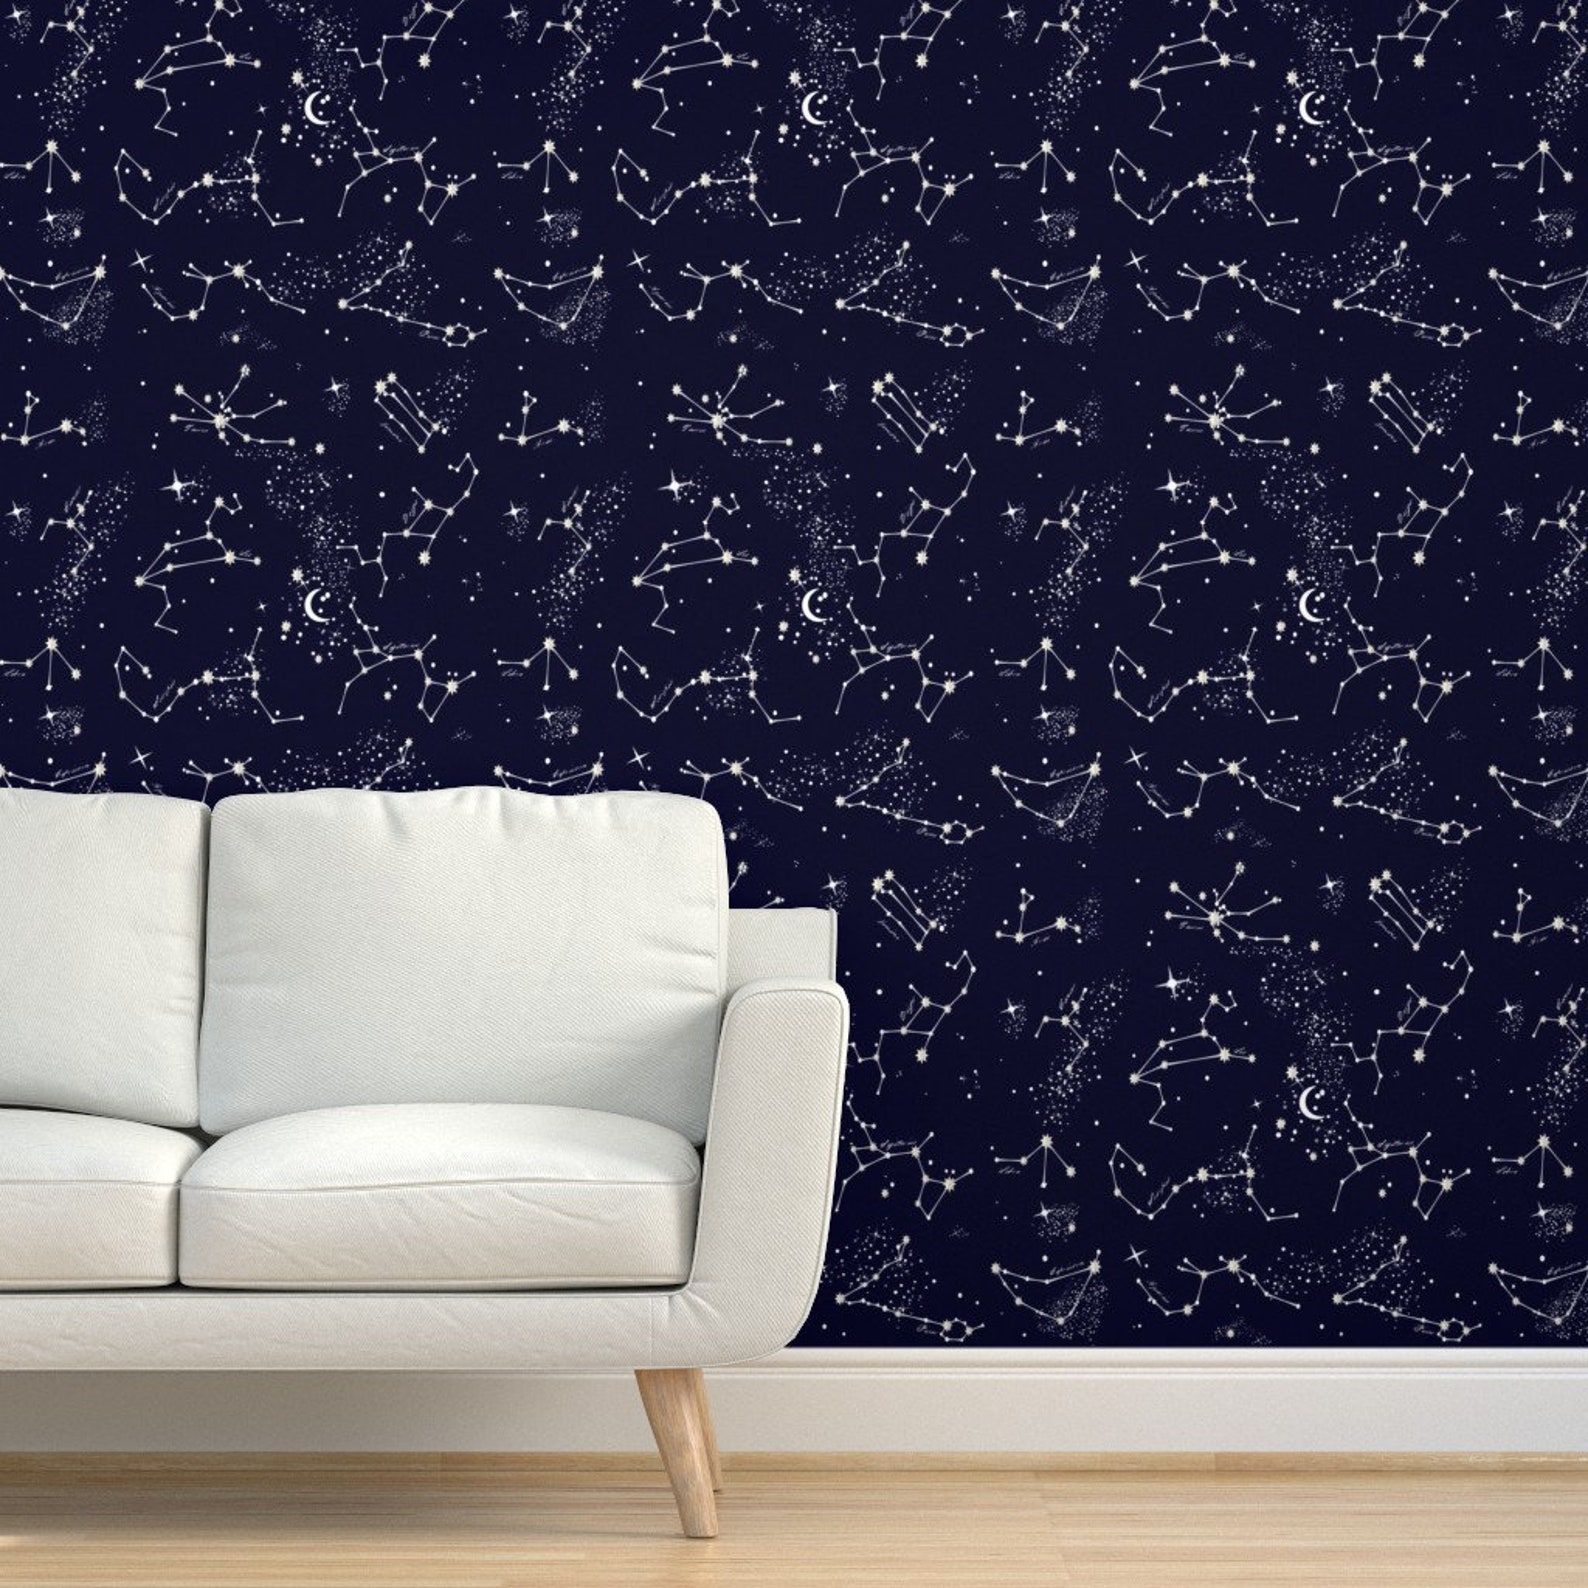 Zodiac Wallpaper Constellations by Elliottdesignfactory - Etsy